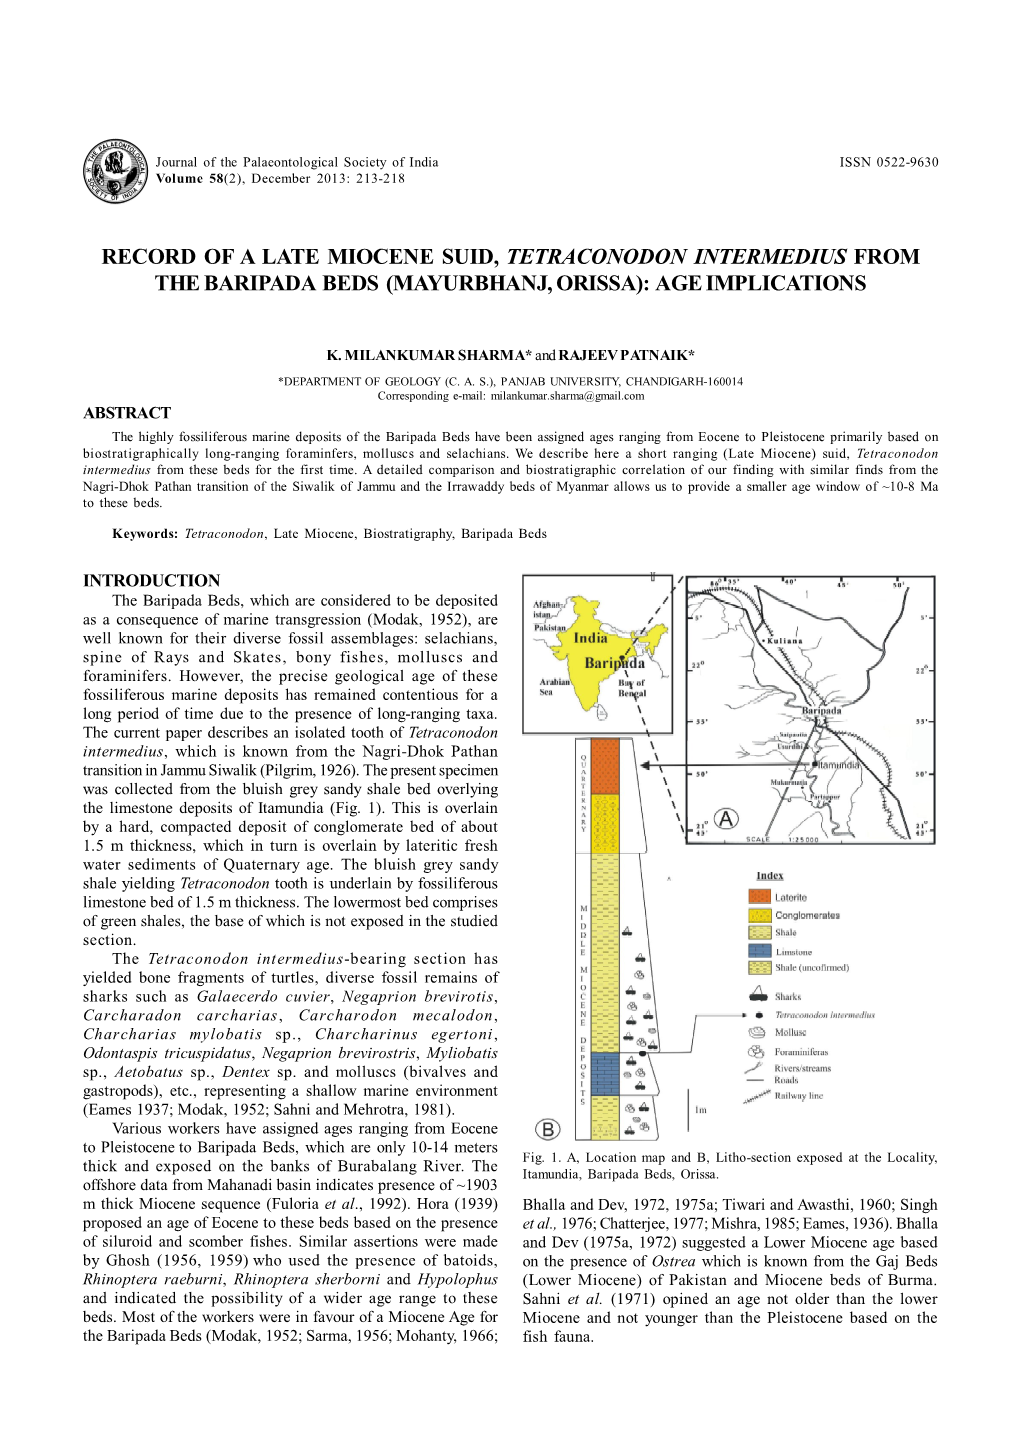 Record of a Late Miocene Suid, Tetraconodon Intermedius from the Baripada Beds (Mayurbhanj, Orissa): Age Implications